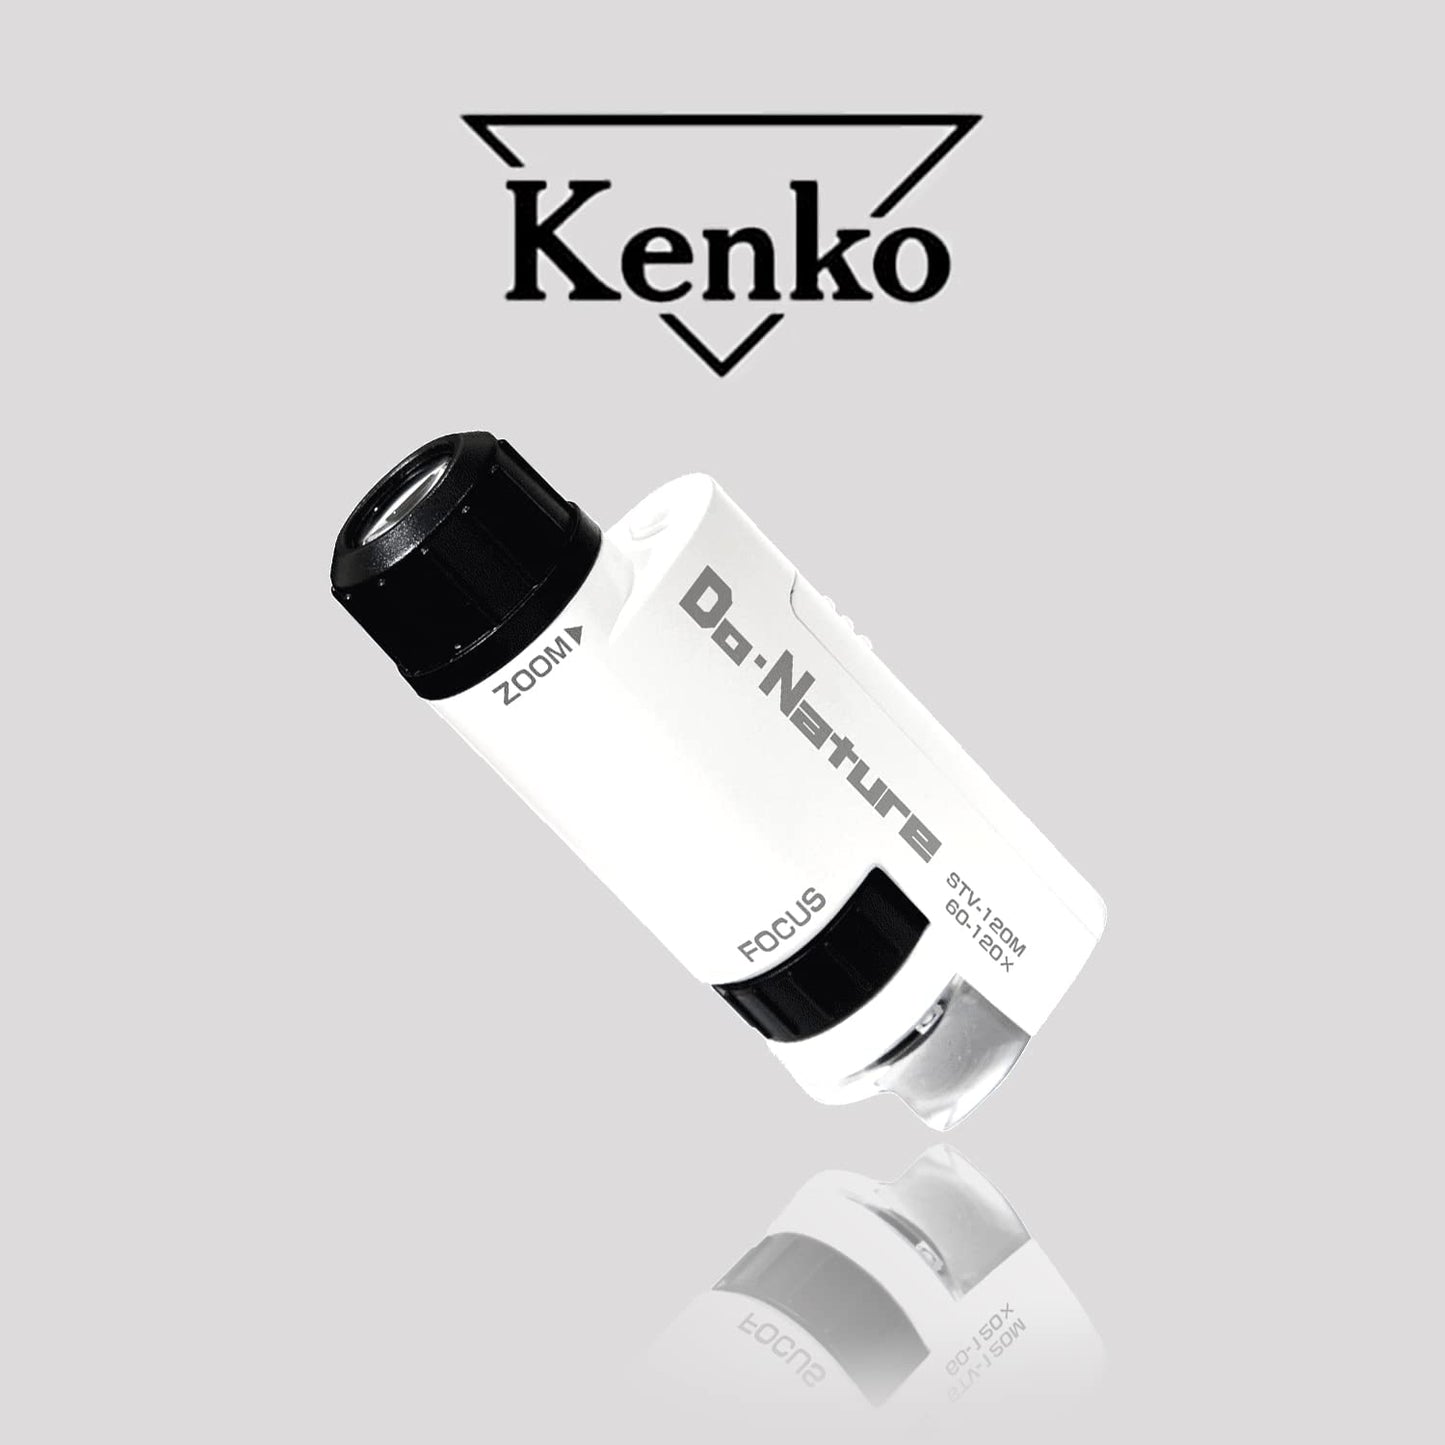 Kenko 顕微鏡 Do・Nature 60-120倍 LEDライト内蔵 コンパクト携帯型 STV-120M